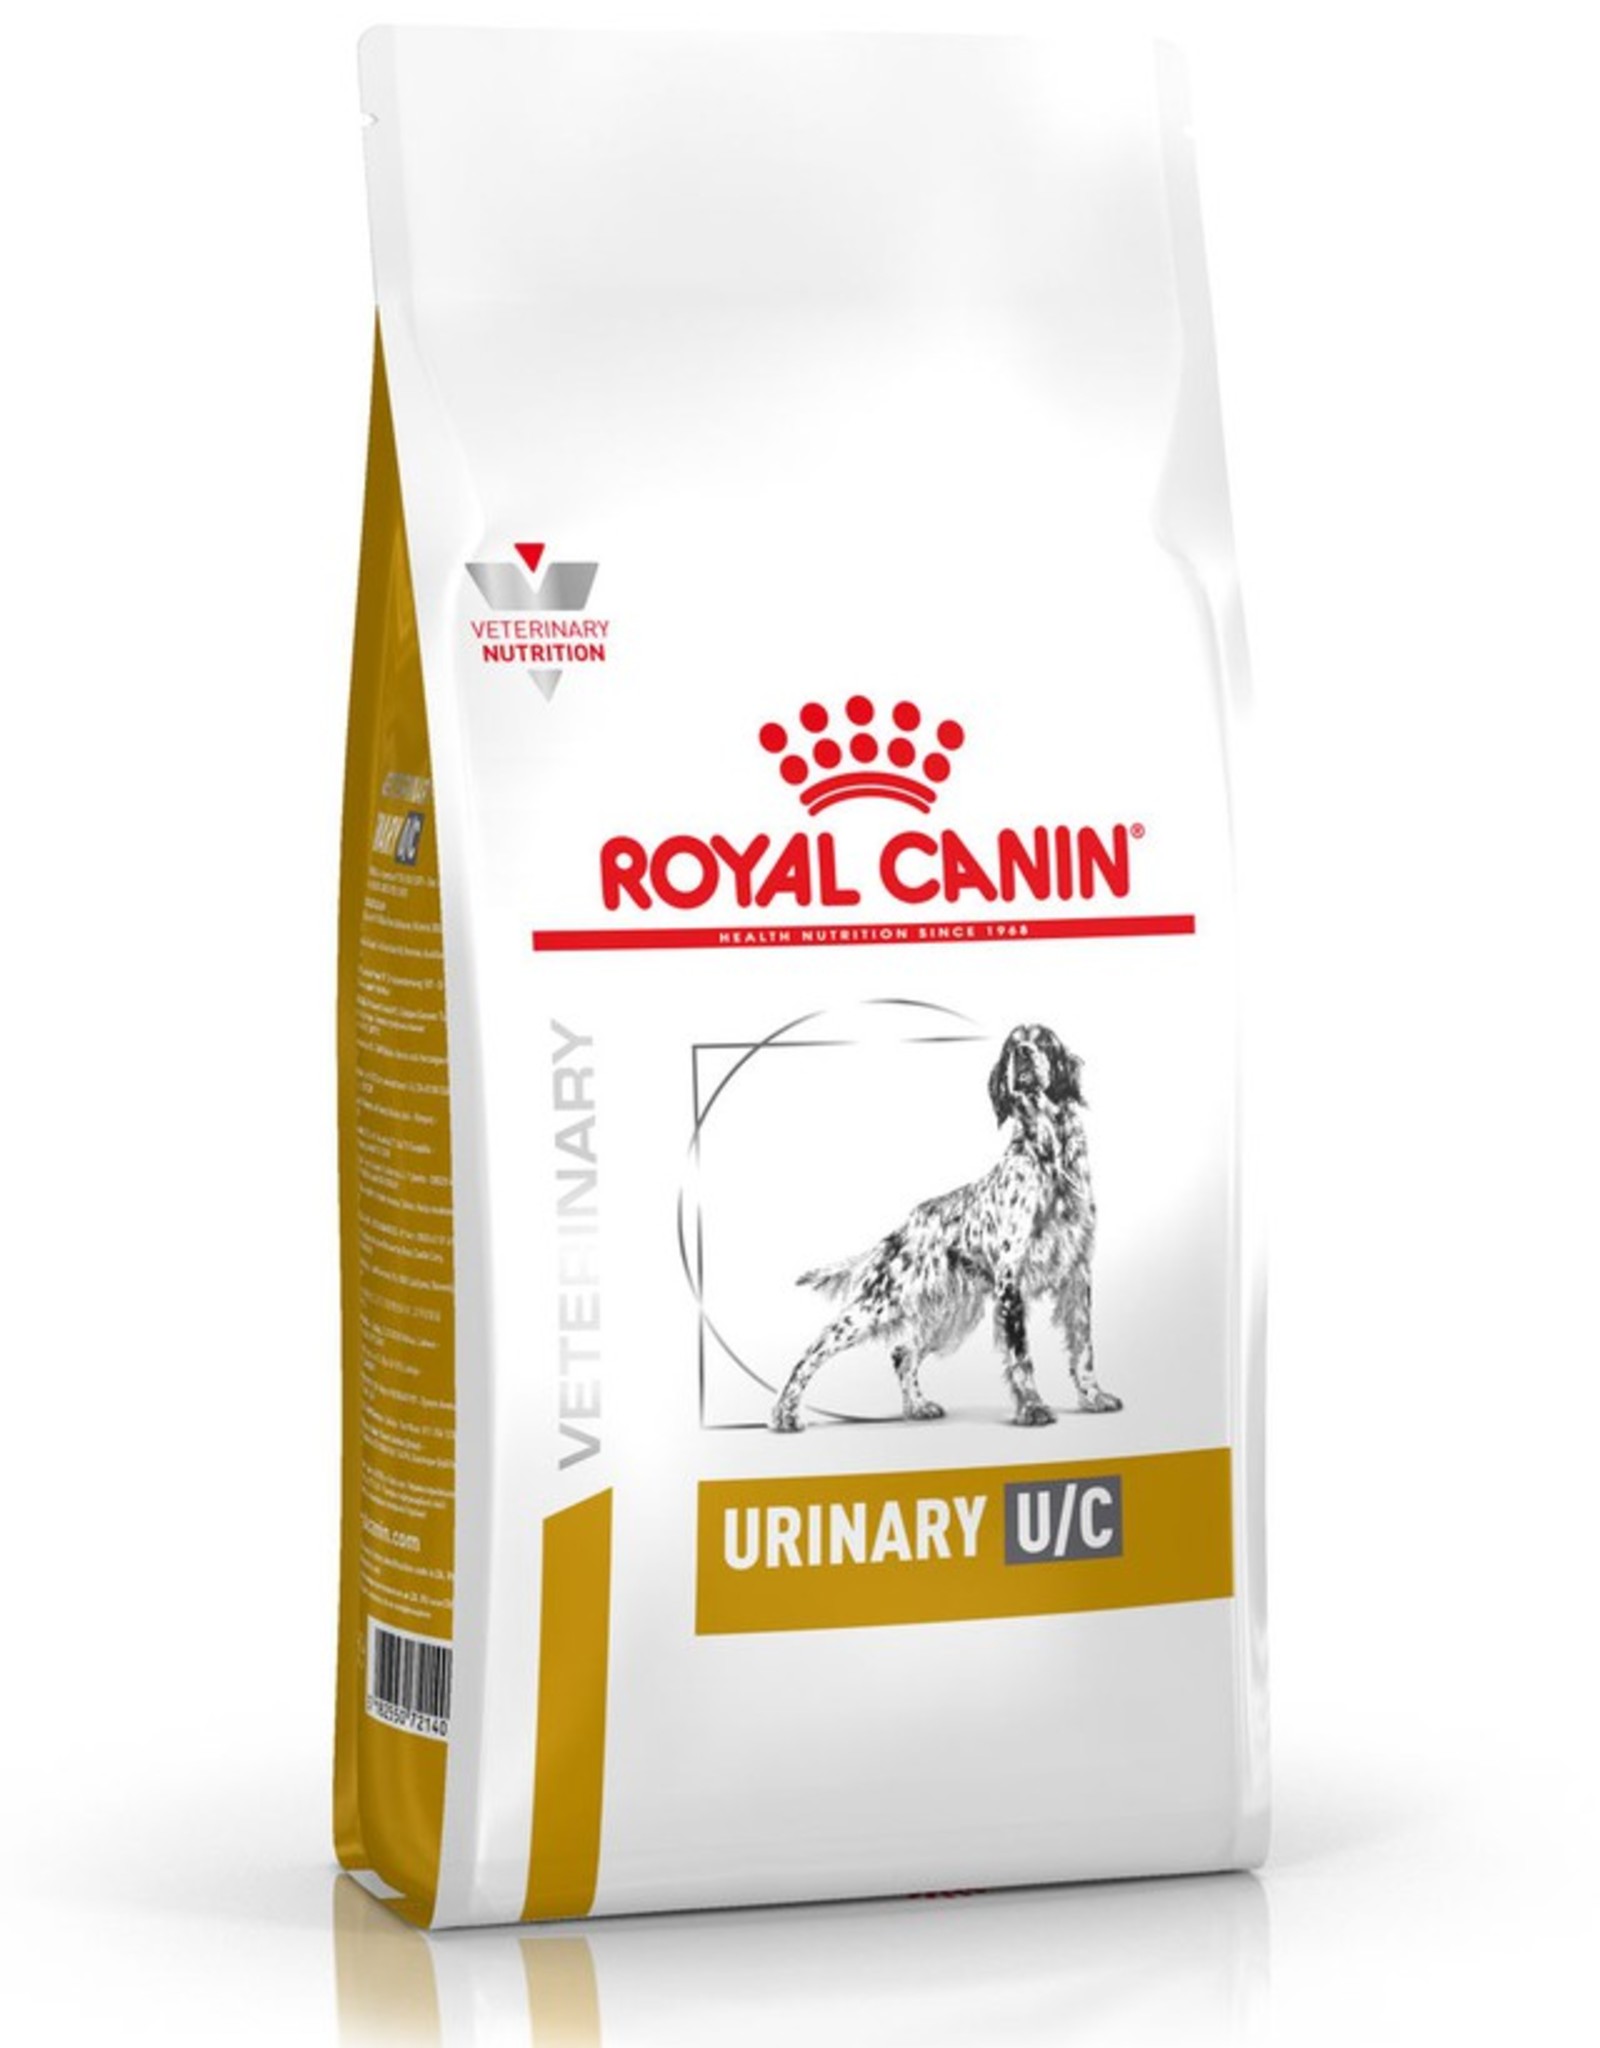 Royal Canin Royal Canin Urinary U/c Low Purine   Hund 14kg